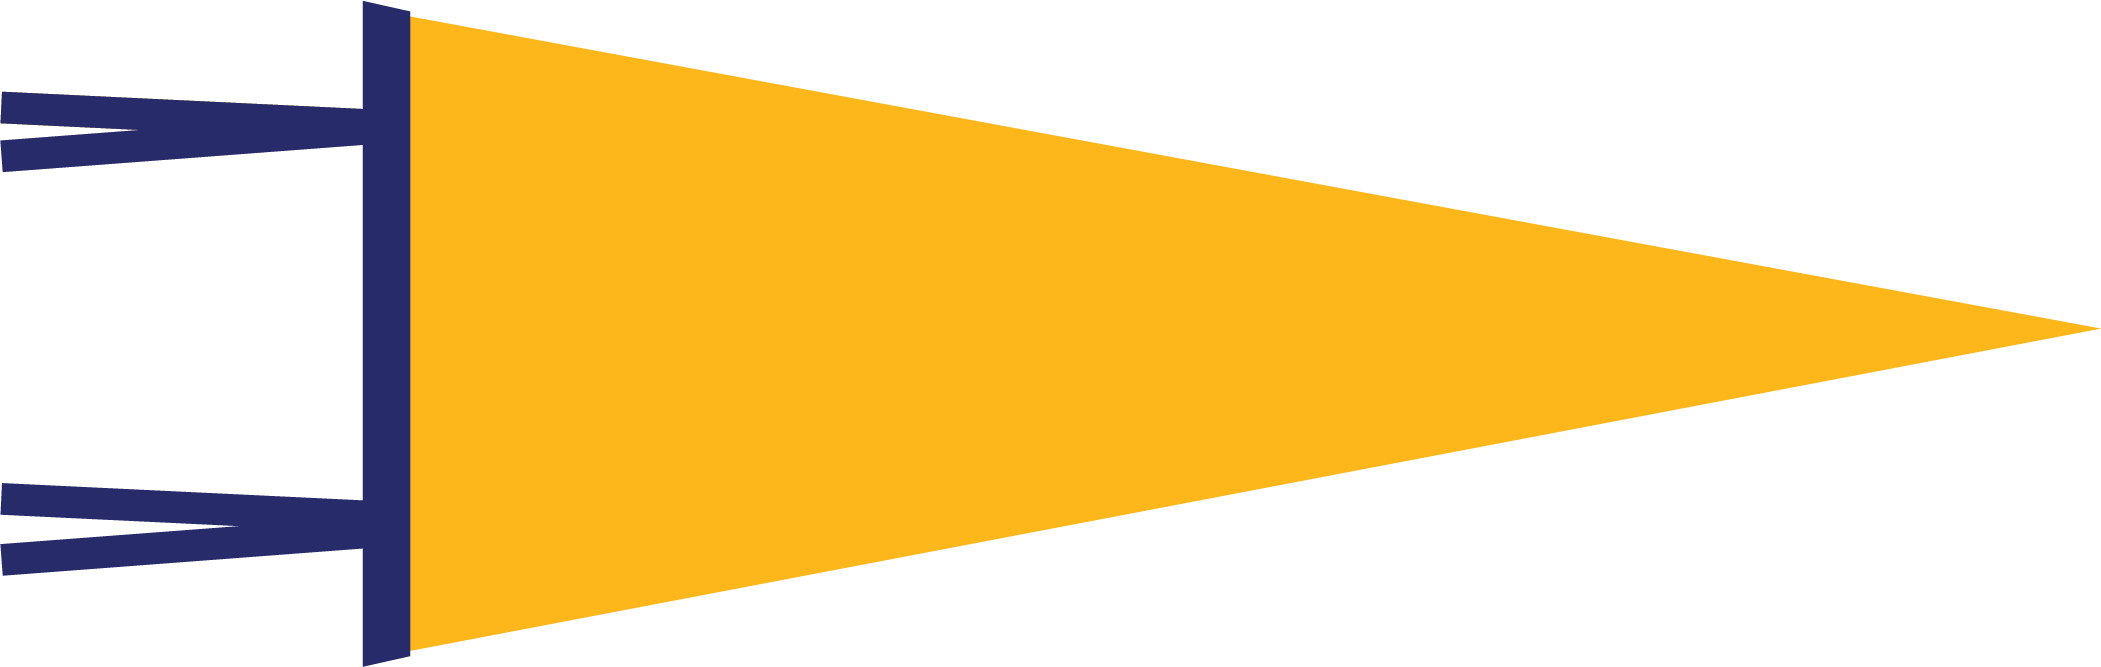 Gold / Navy Blank Pennant Flag